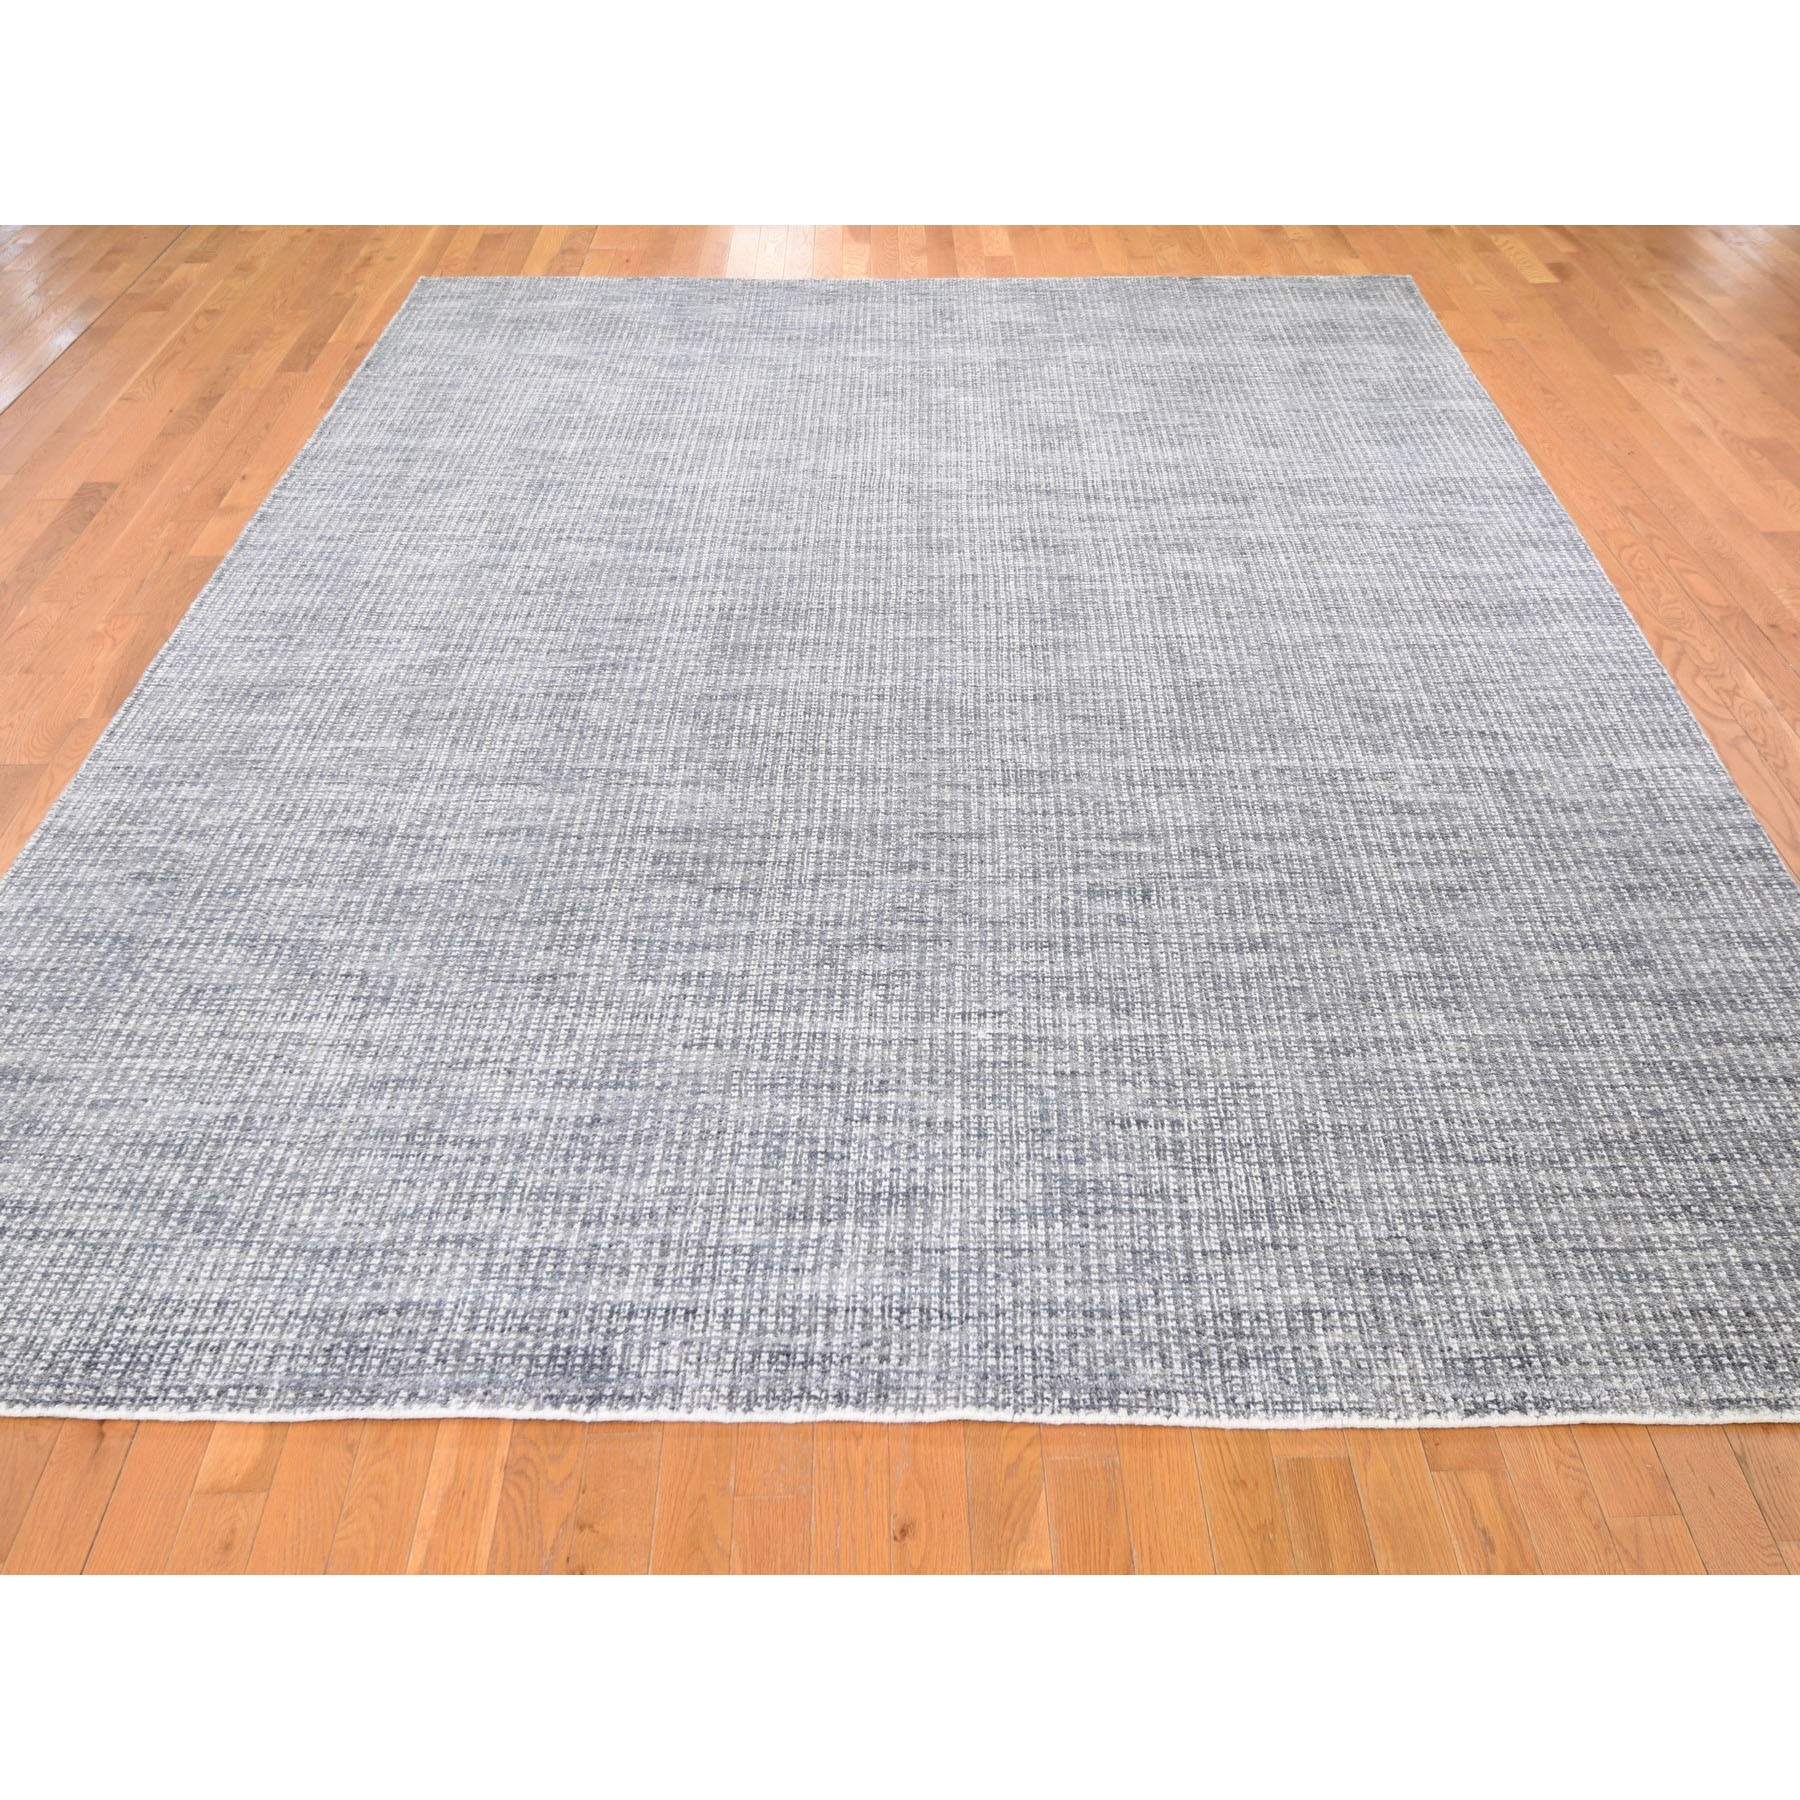 9-1 x12-1  Gray Wool And Silk Modern Hand Loomed Oriental Rug 